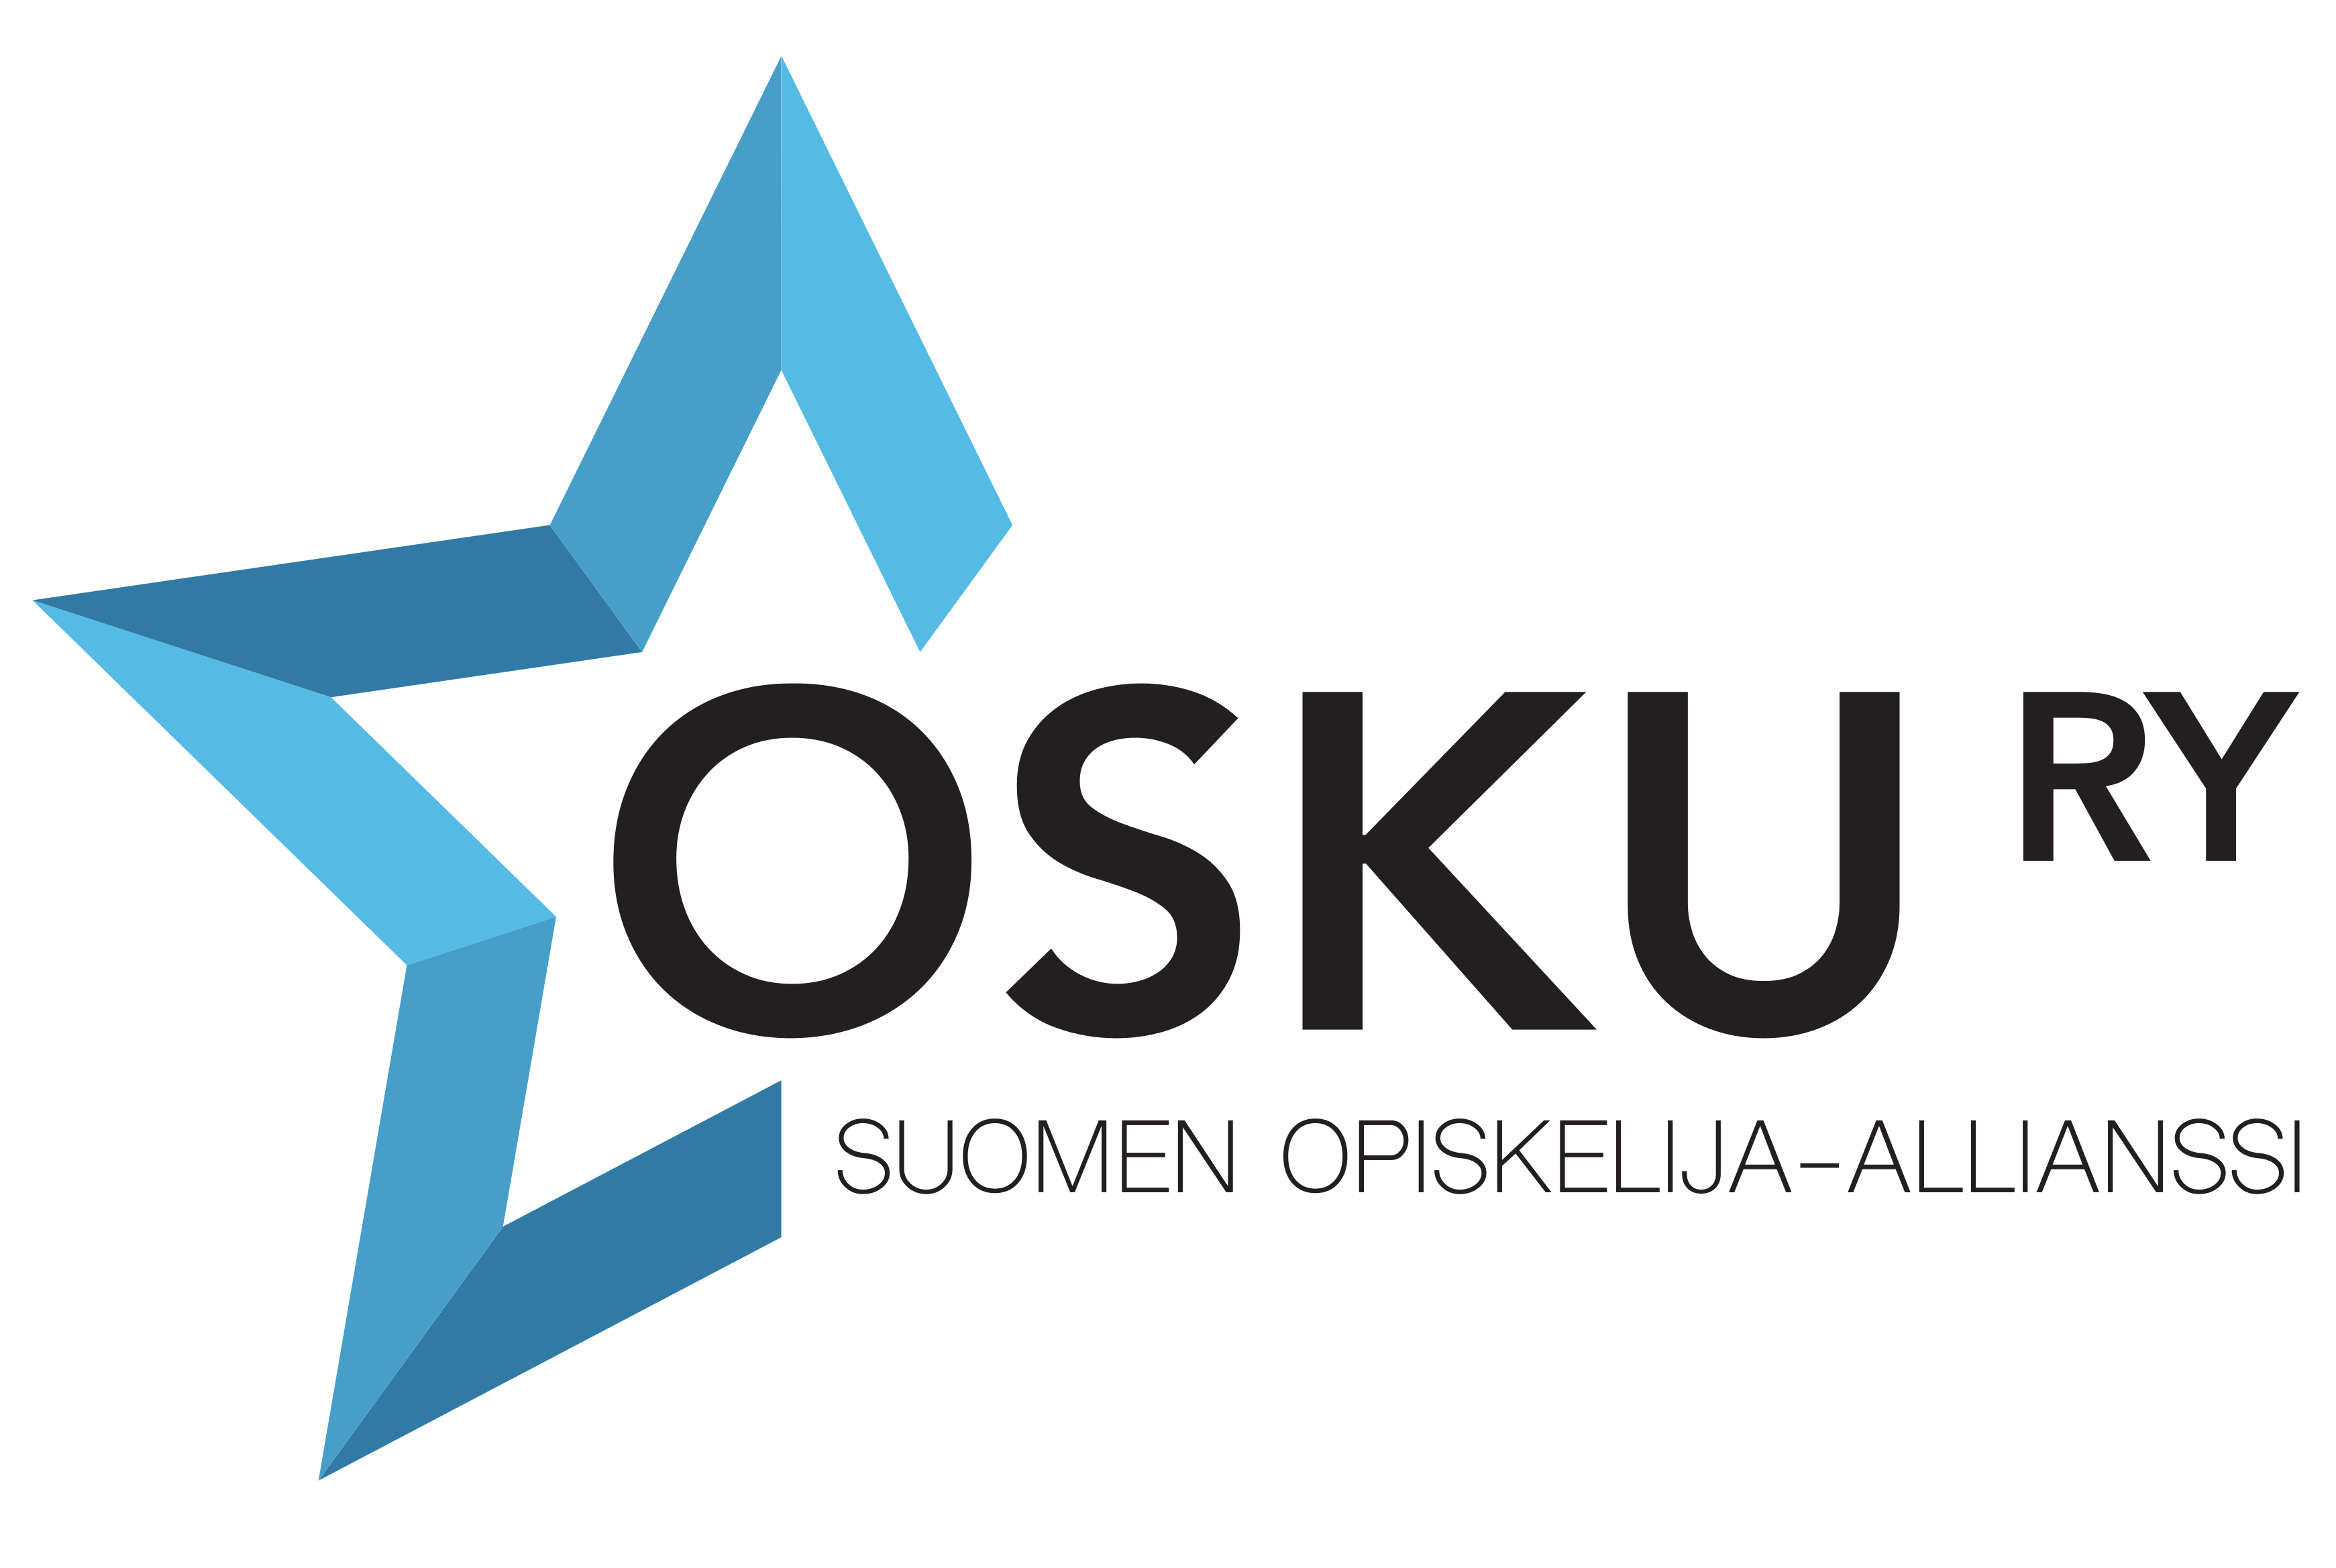 Suomen opiskelija-allianssi Osku ry:n logo